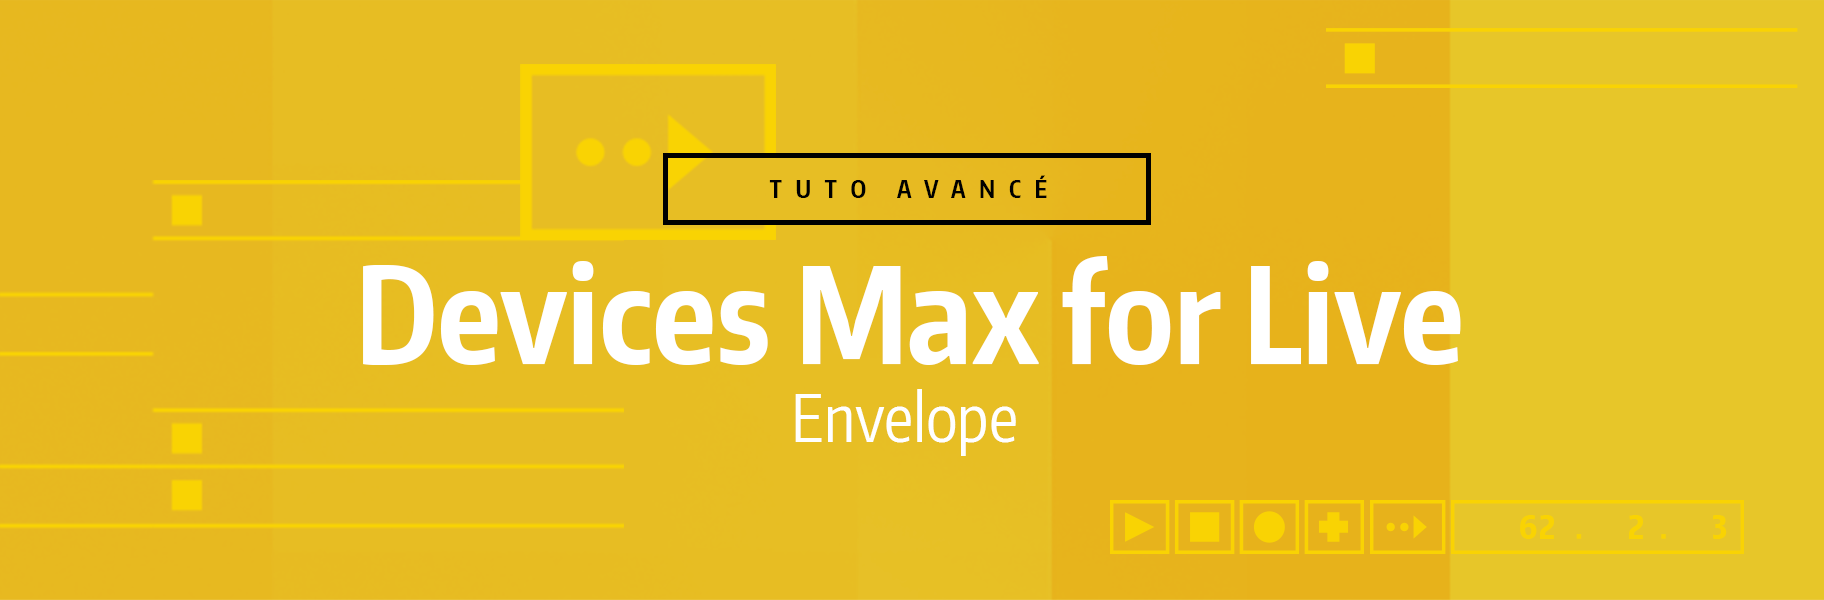 Tutoriel Ableton Live - Devices Max for Live - Envelope